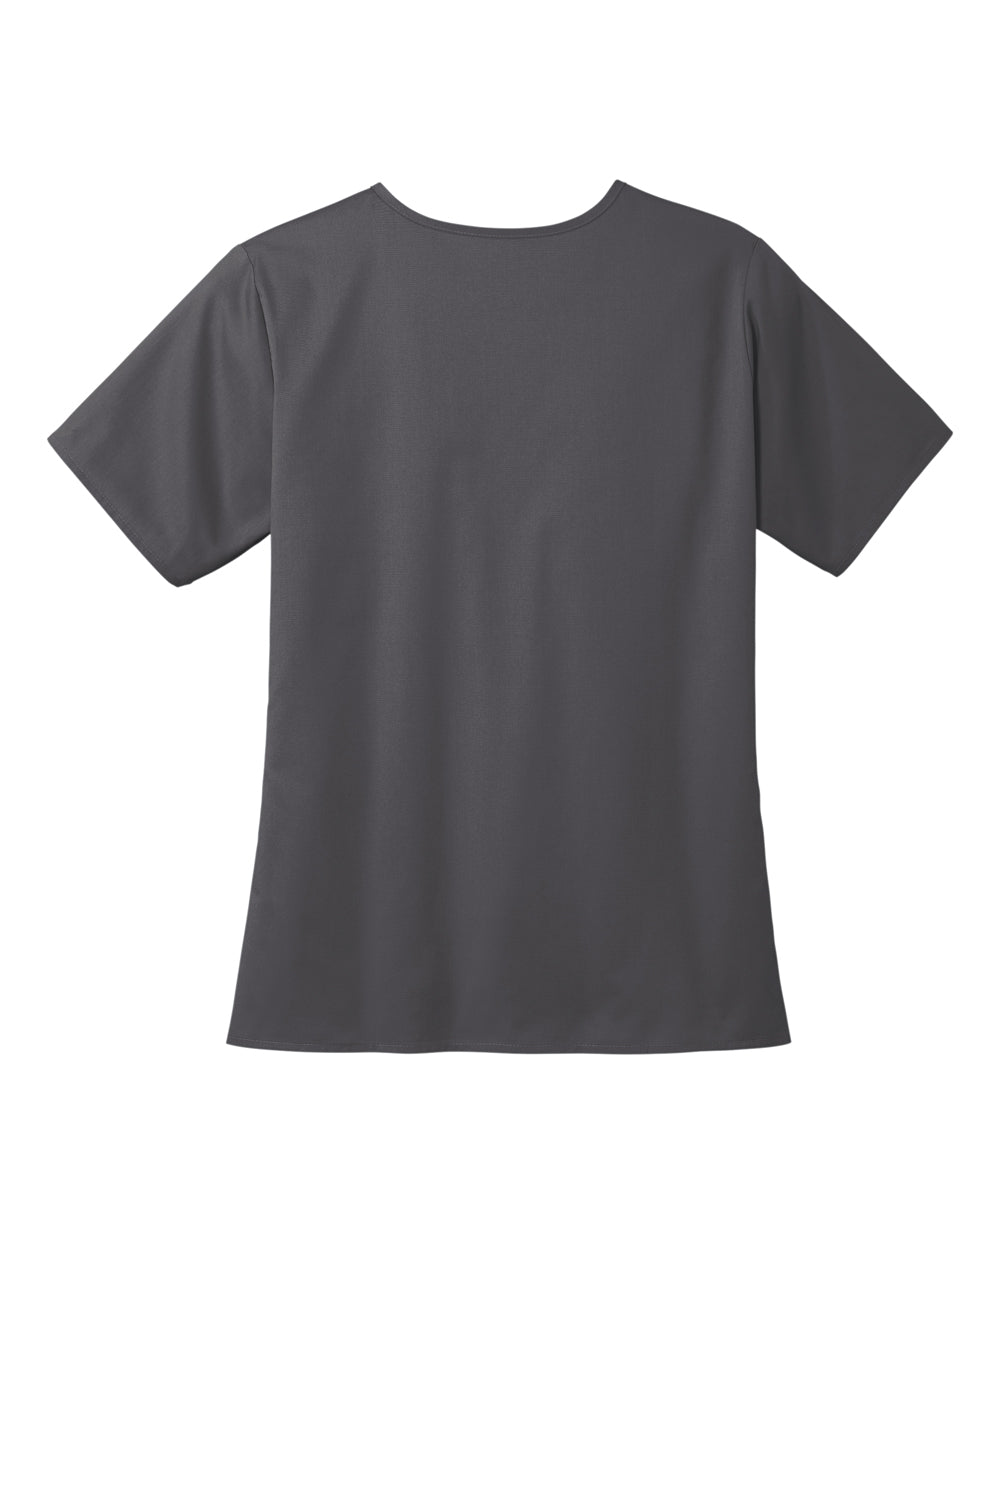 Wonderwink WW4560 WorkFlex Short Sleeve V-Neck Shirt Pewter Grey Flat Back